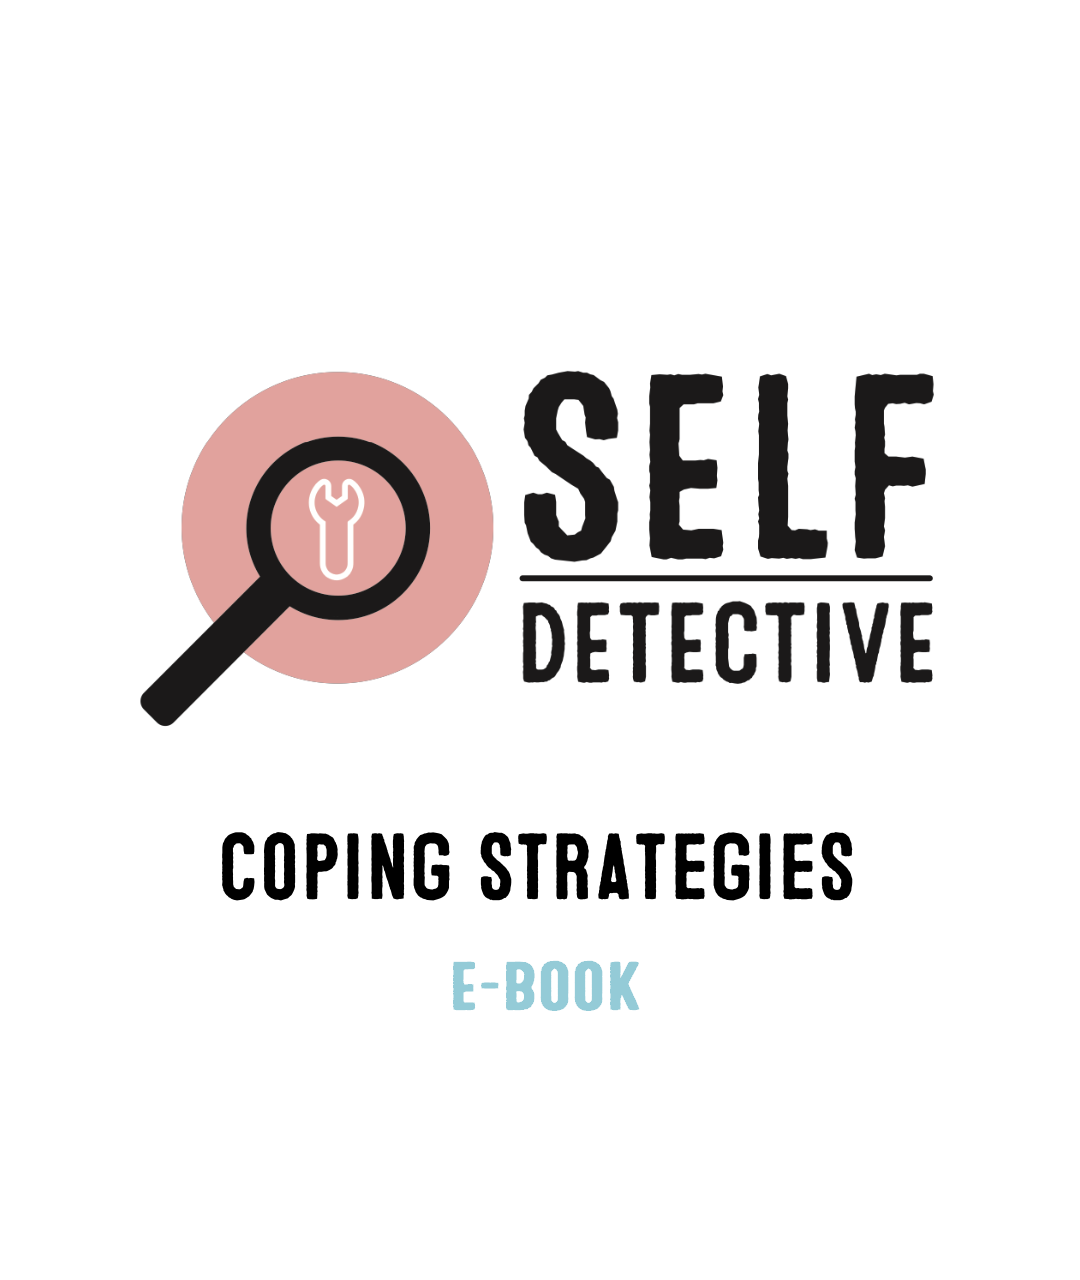 Coping Strategies (E-book version)